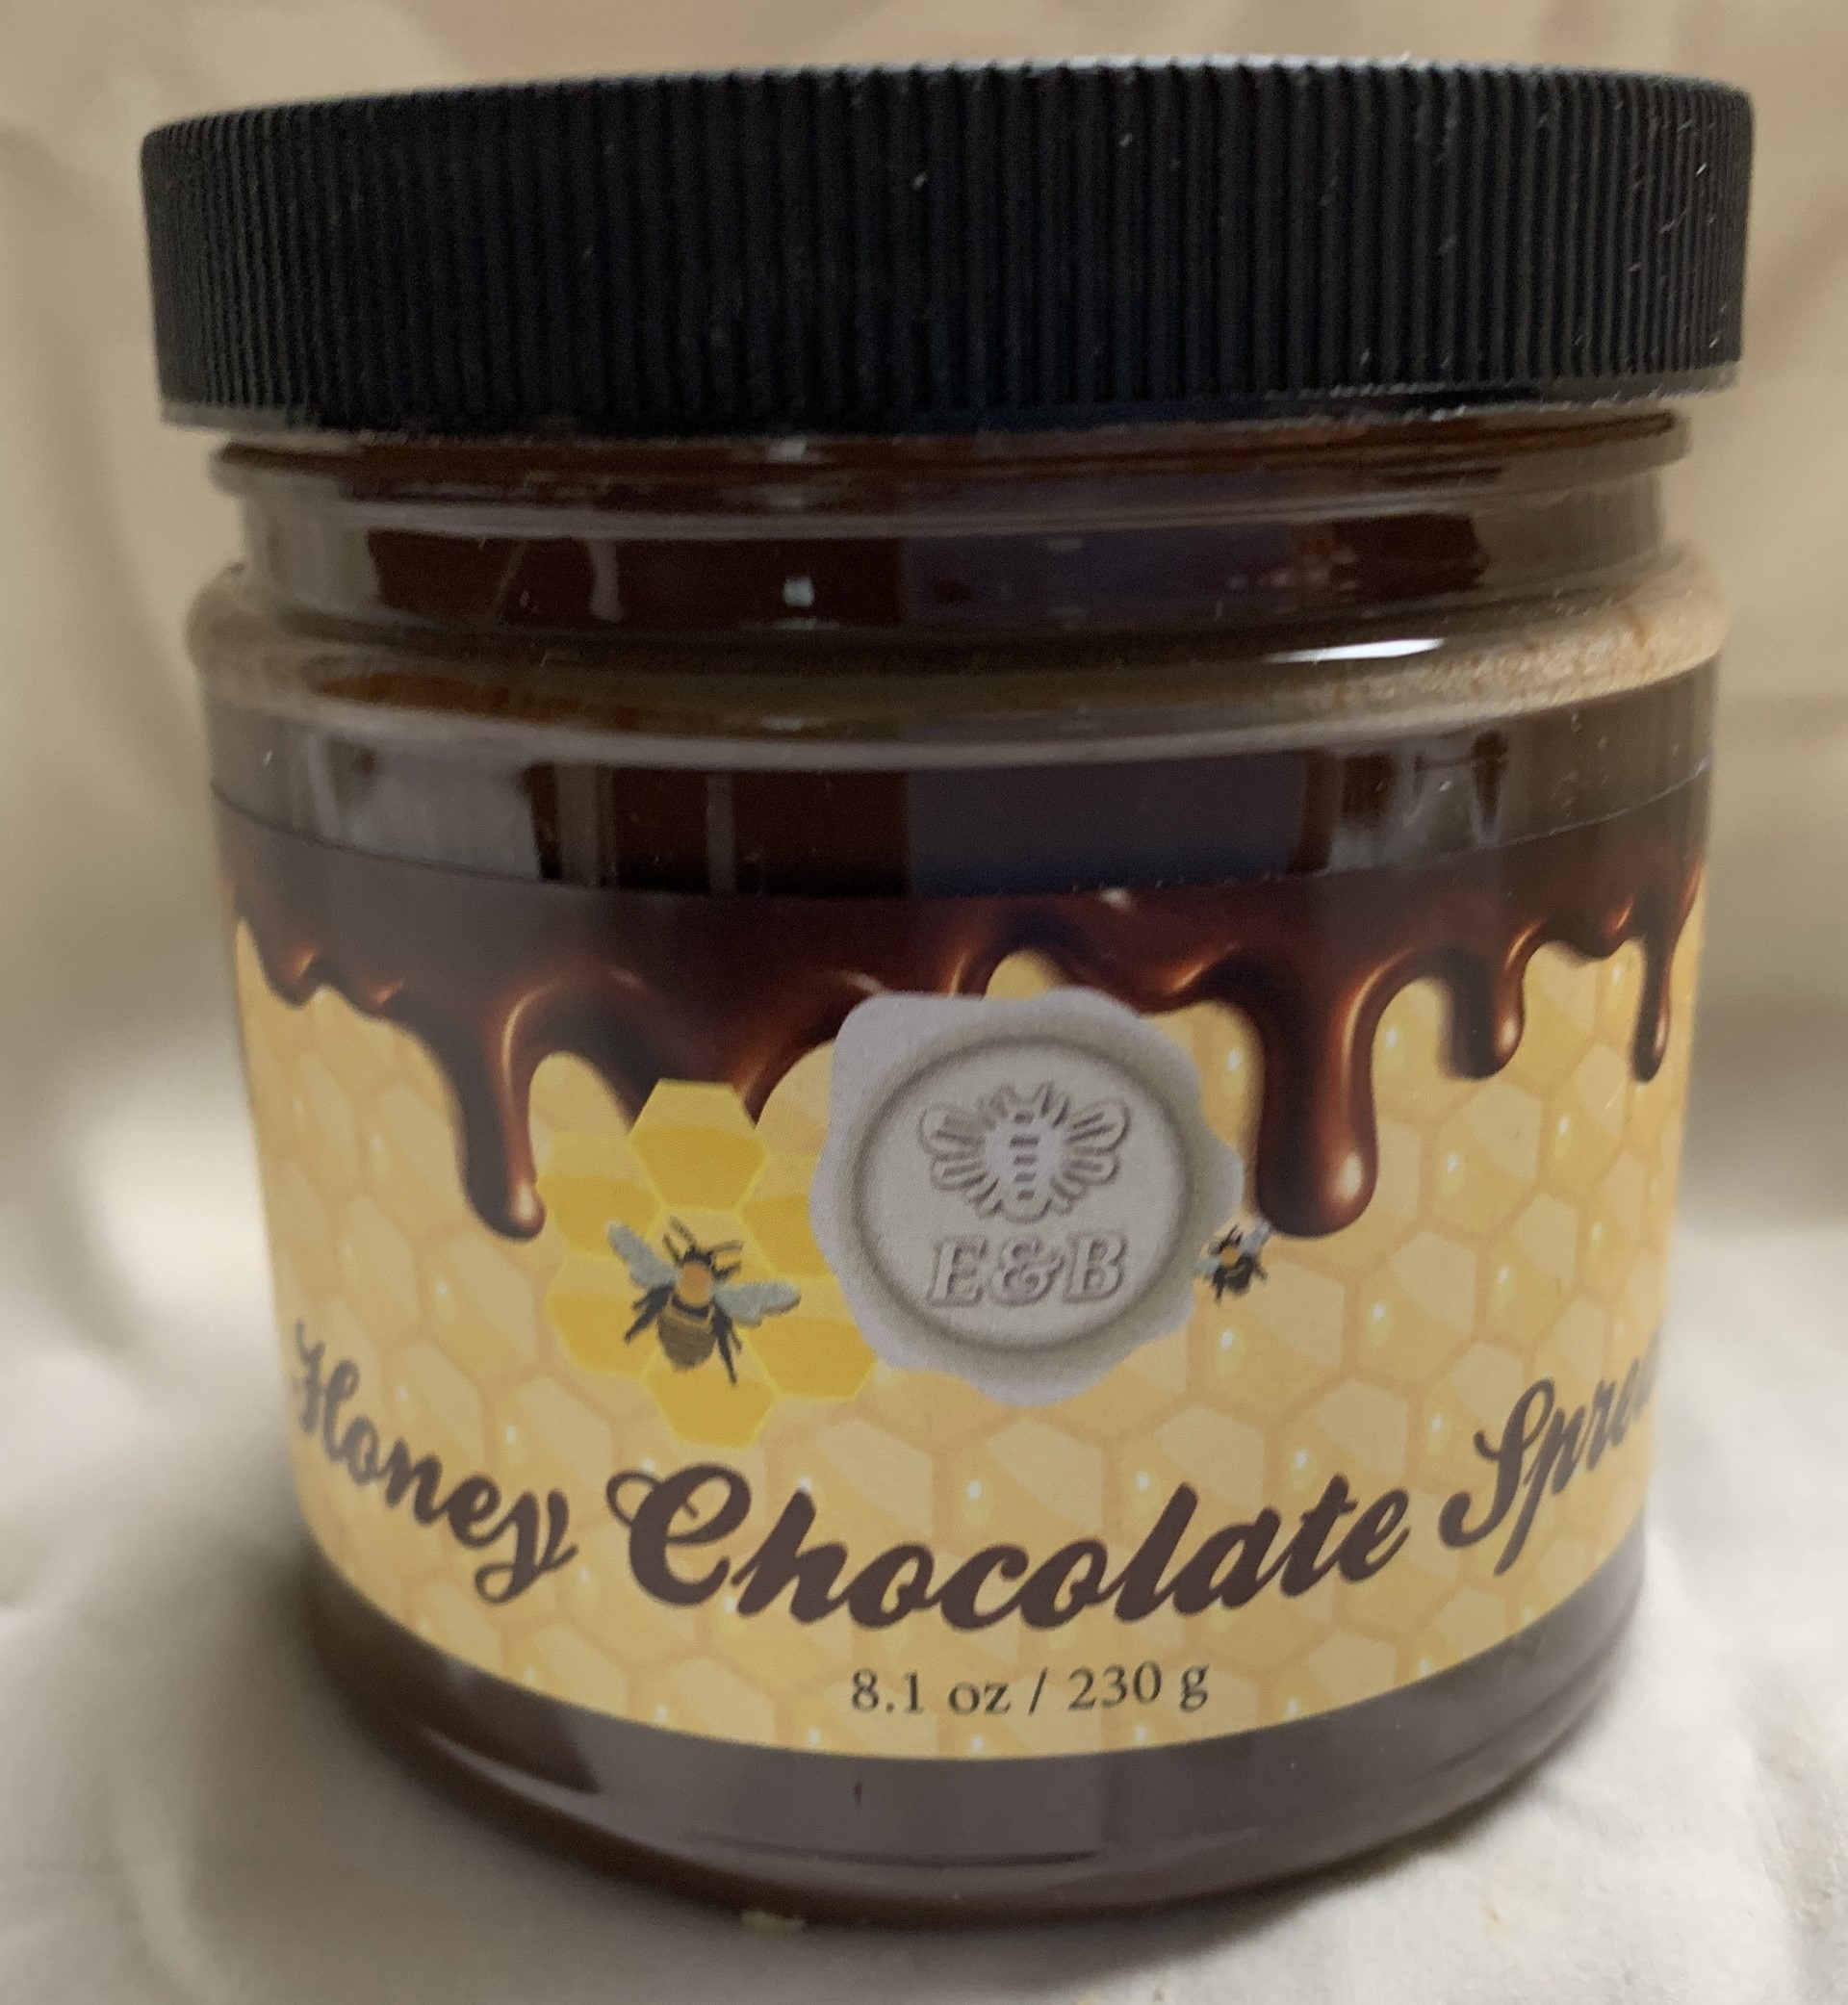 Chocolate Honey Spread